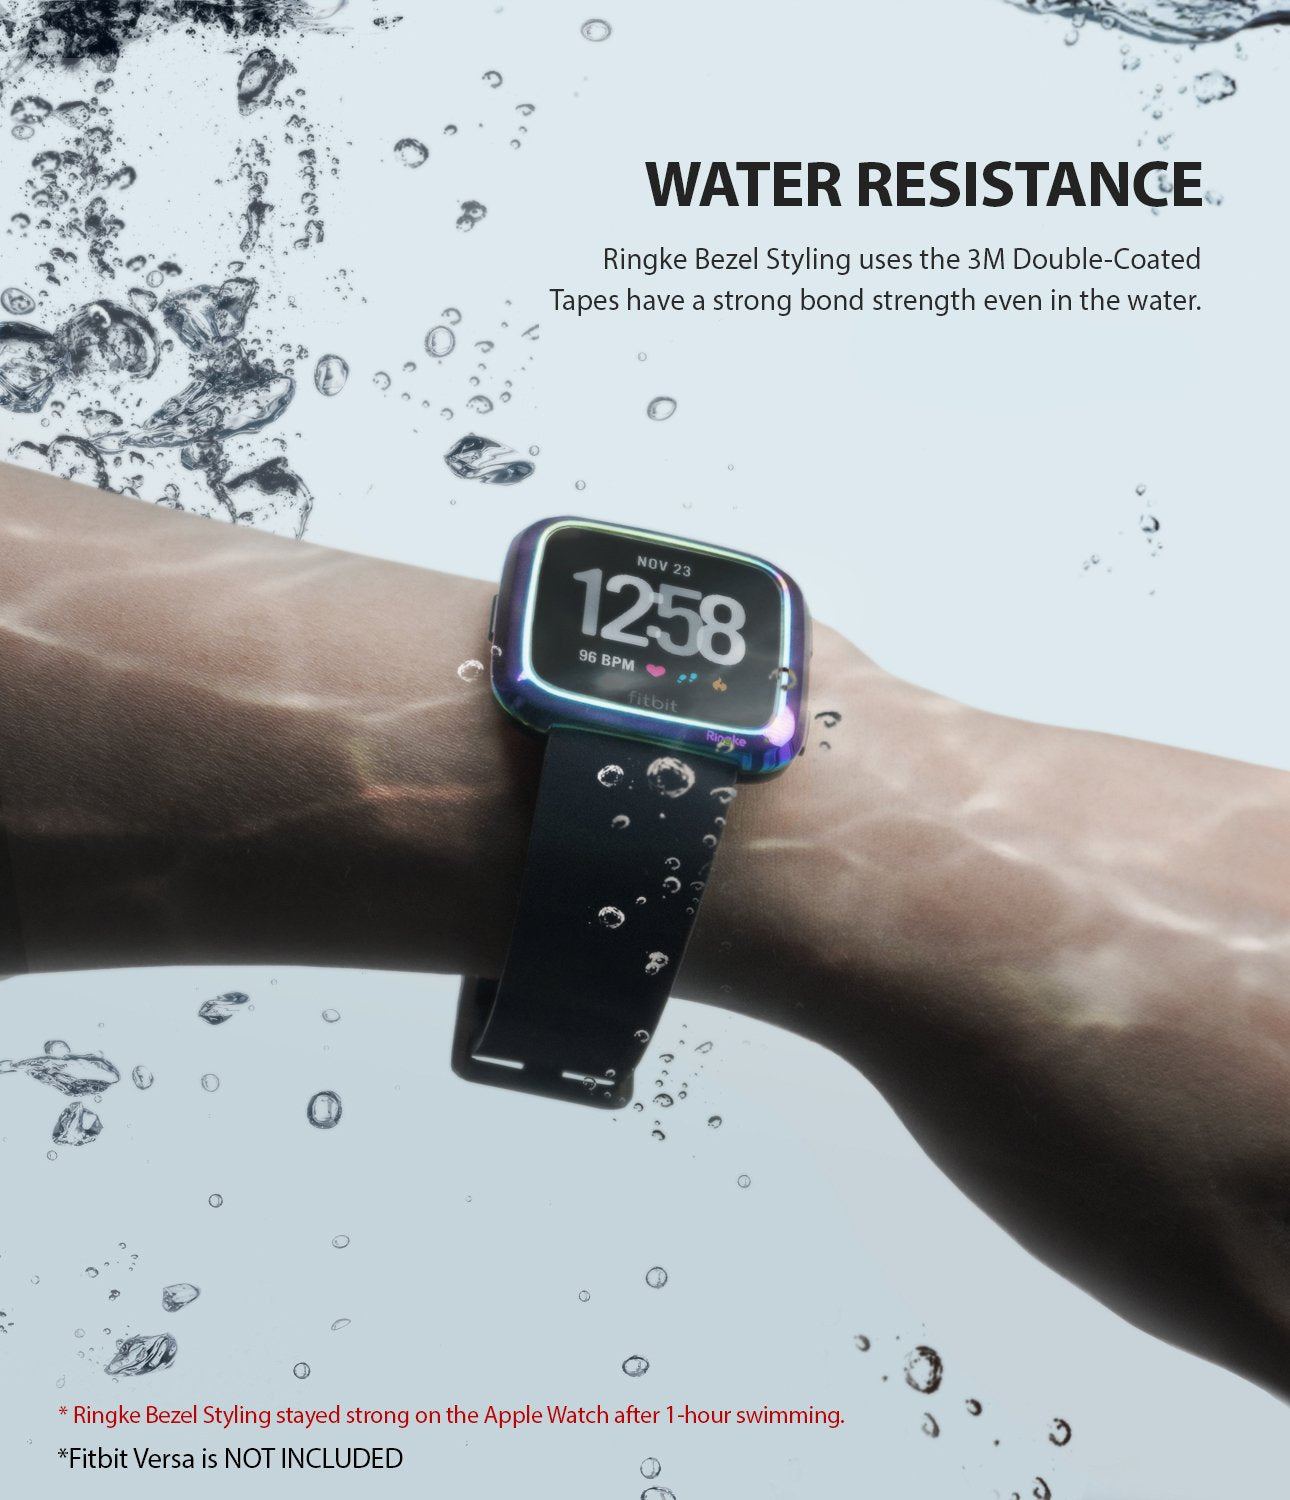 Ringke Bezel Styling Designed for Fitbit Versa Case Cover, Black- FW-V-03, water resistance